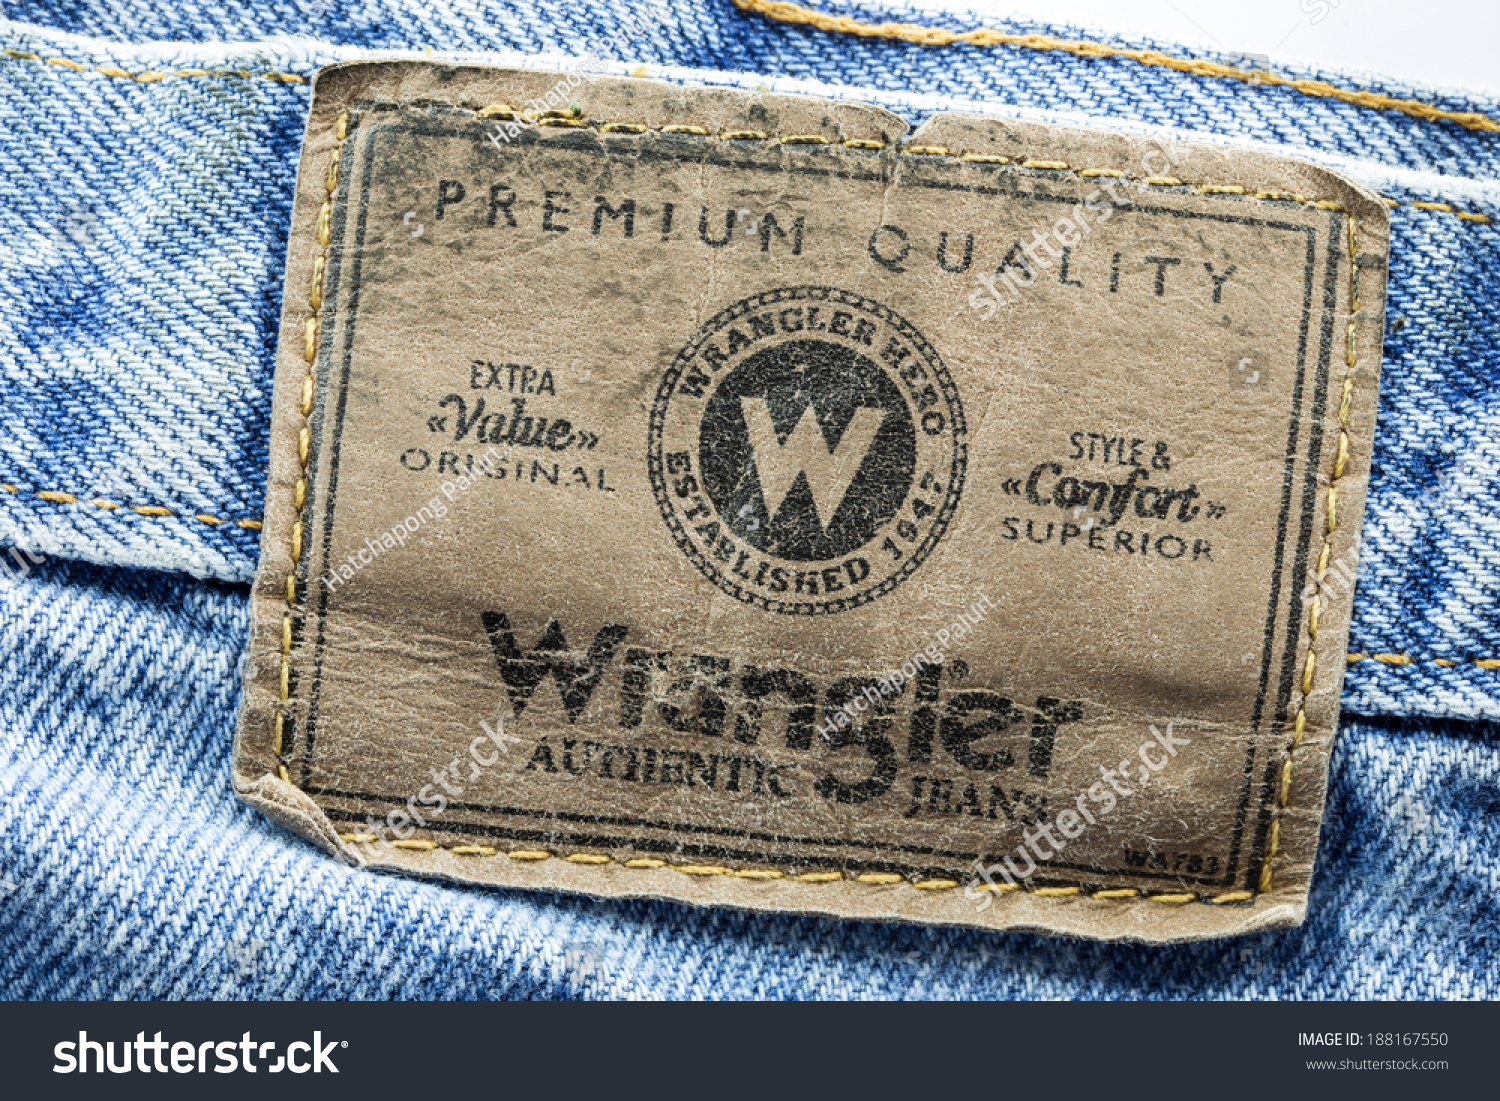 Bangkok, Thailand - March 24, 2014: Closeup Of Wrangler Leather Jeans ...